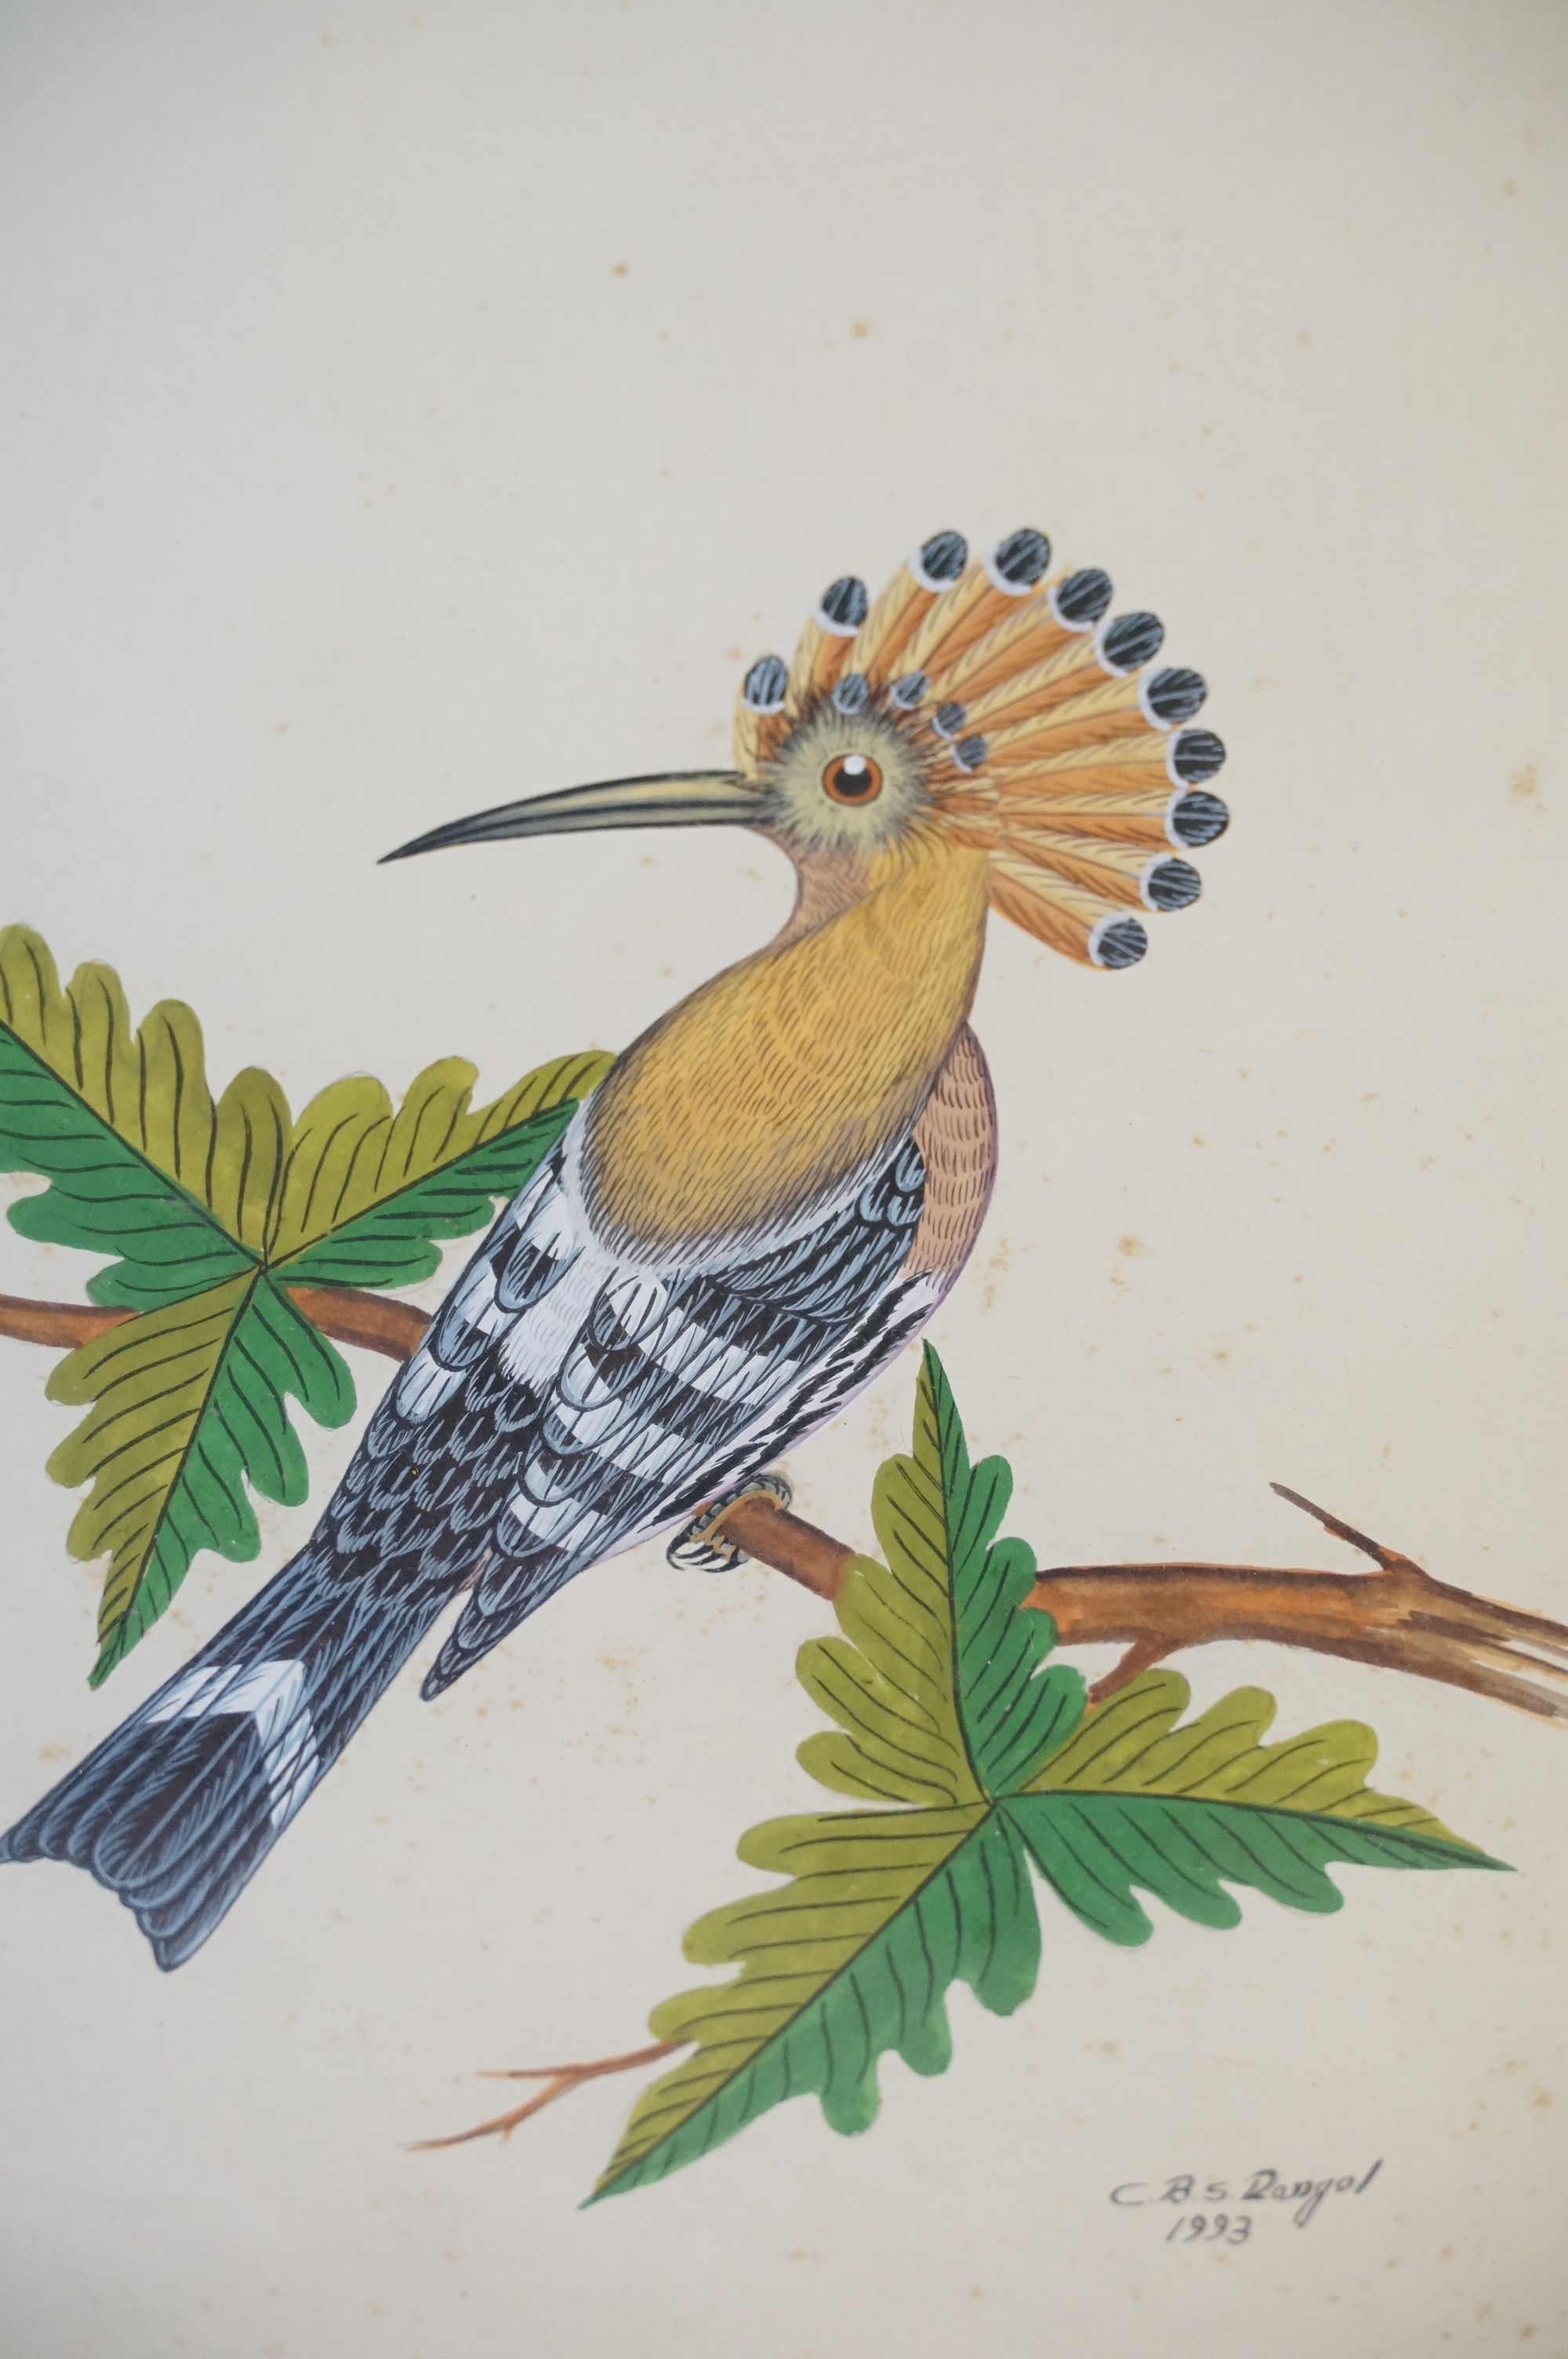 C.B.S Dangol, set of Three Watercolour Studies of Exotic Birds in their habitat - Image 7 of 9